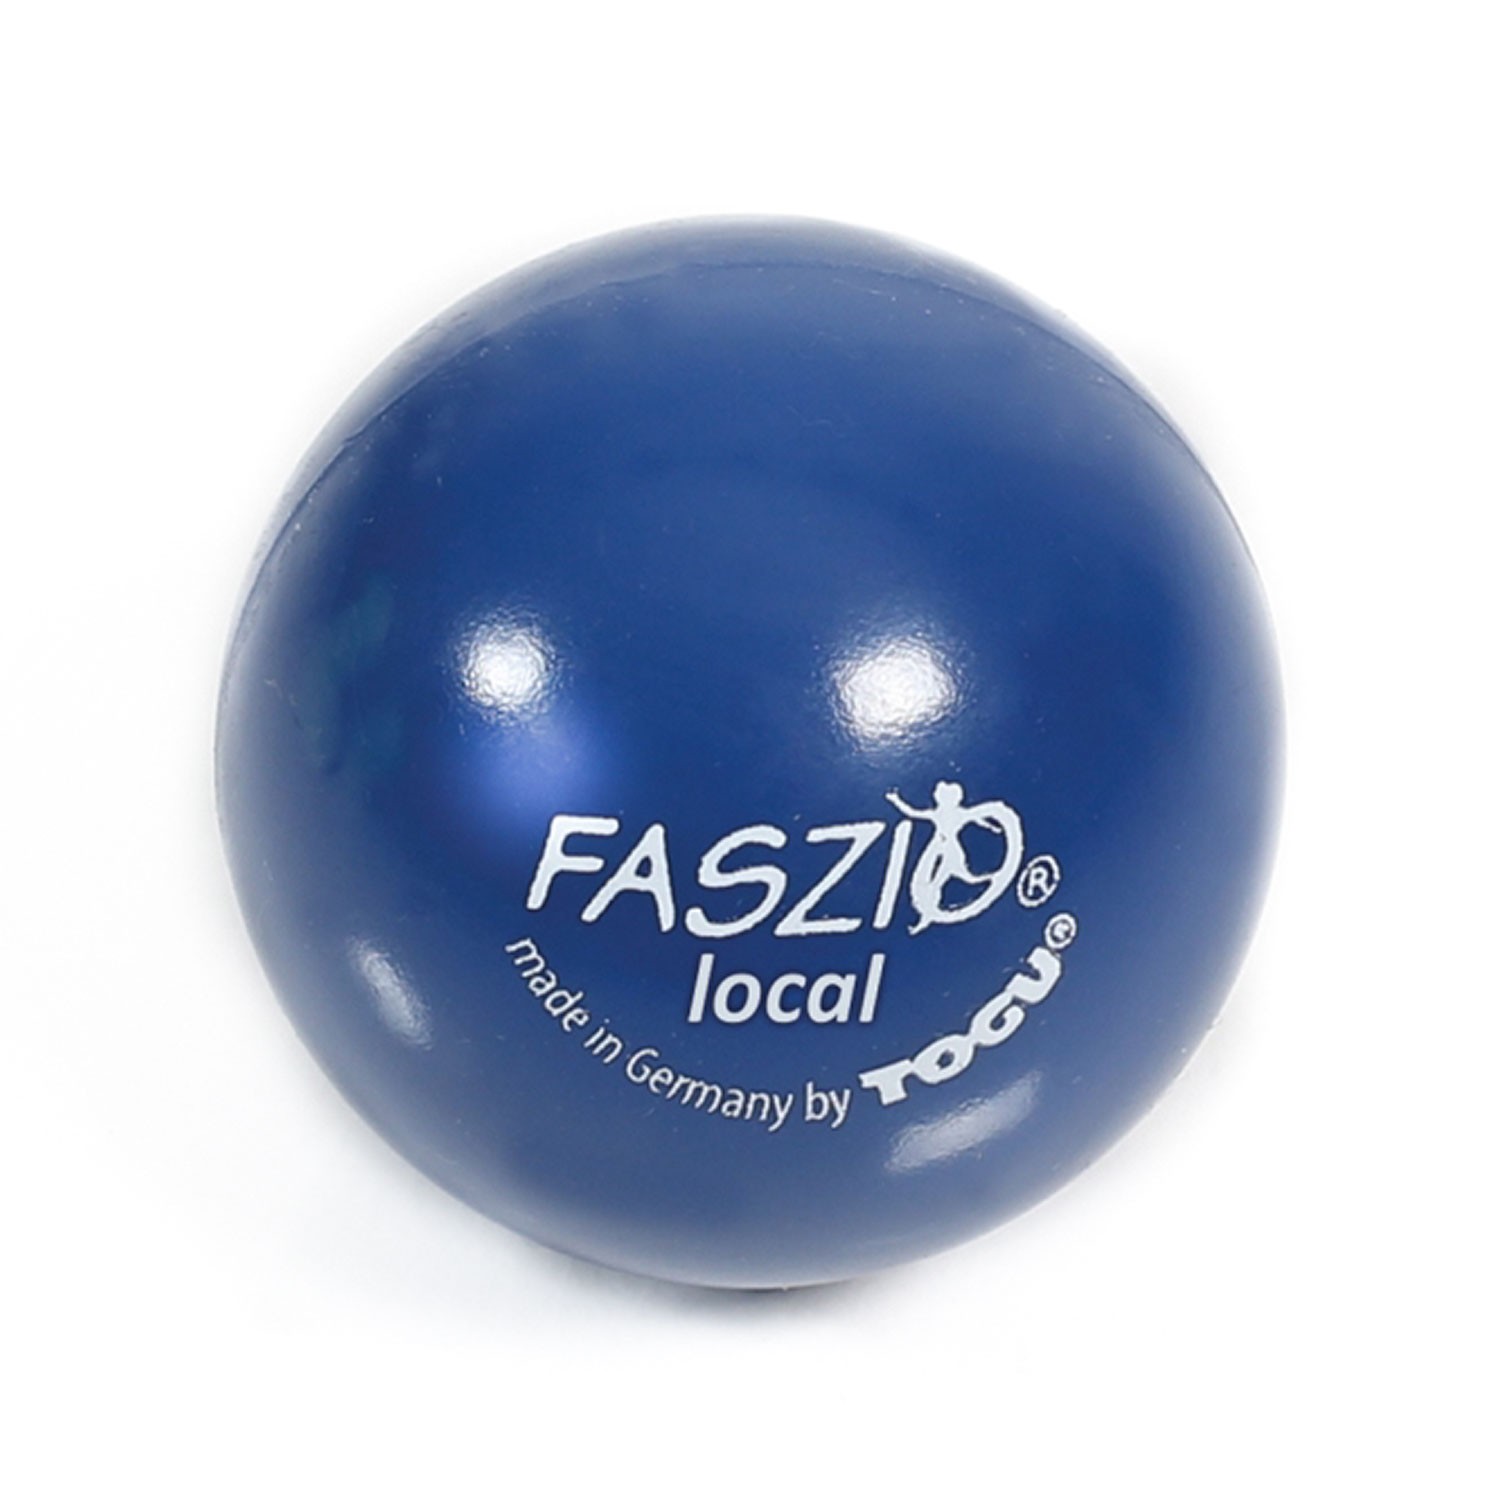 Faszio Ball local